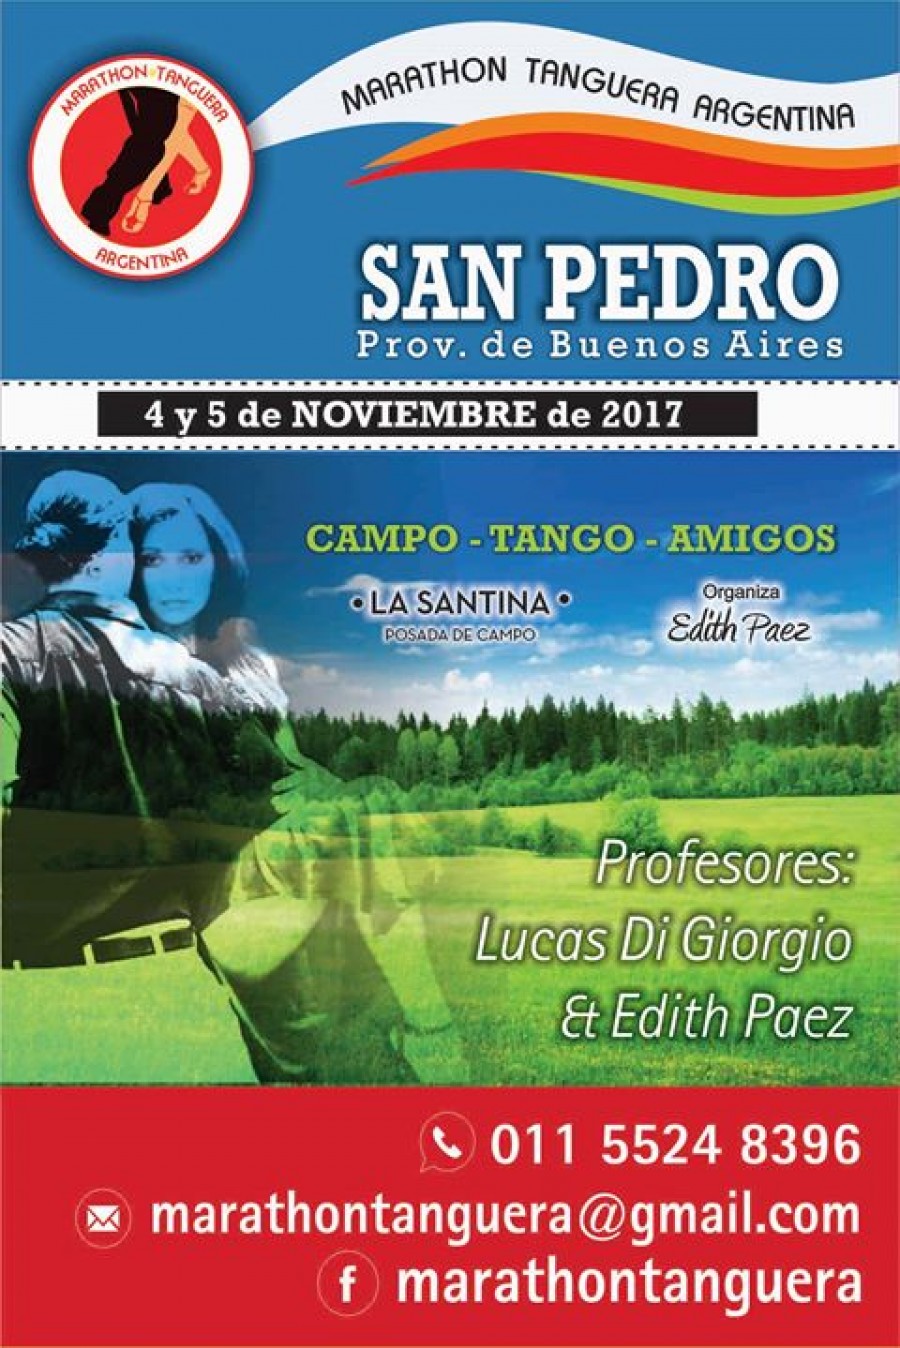 Campo Tango Amigos Marathon Tanguera Argentina